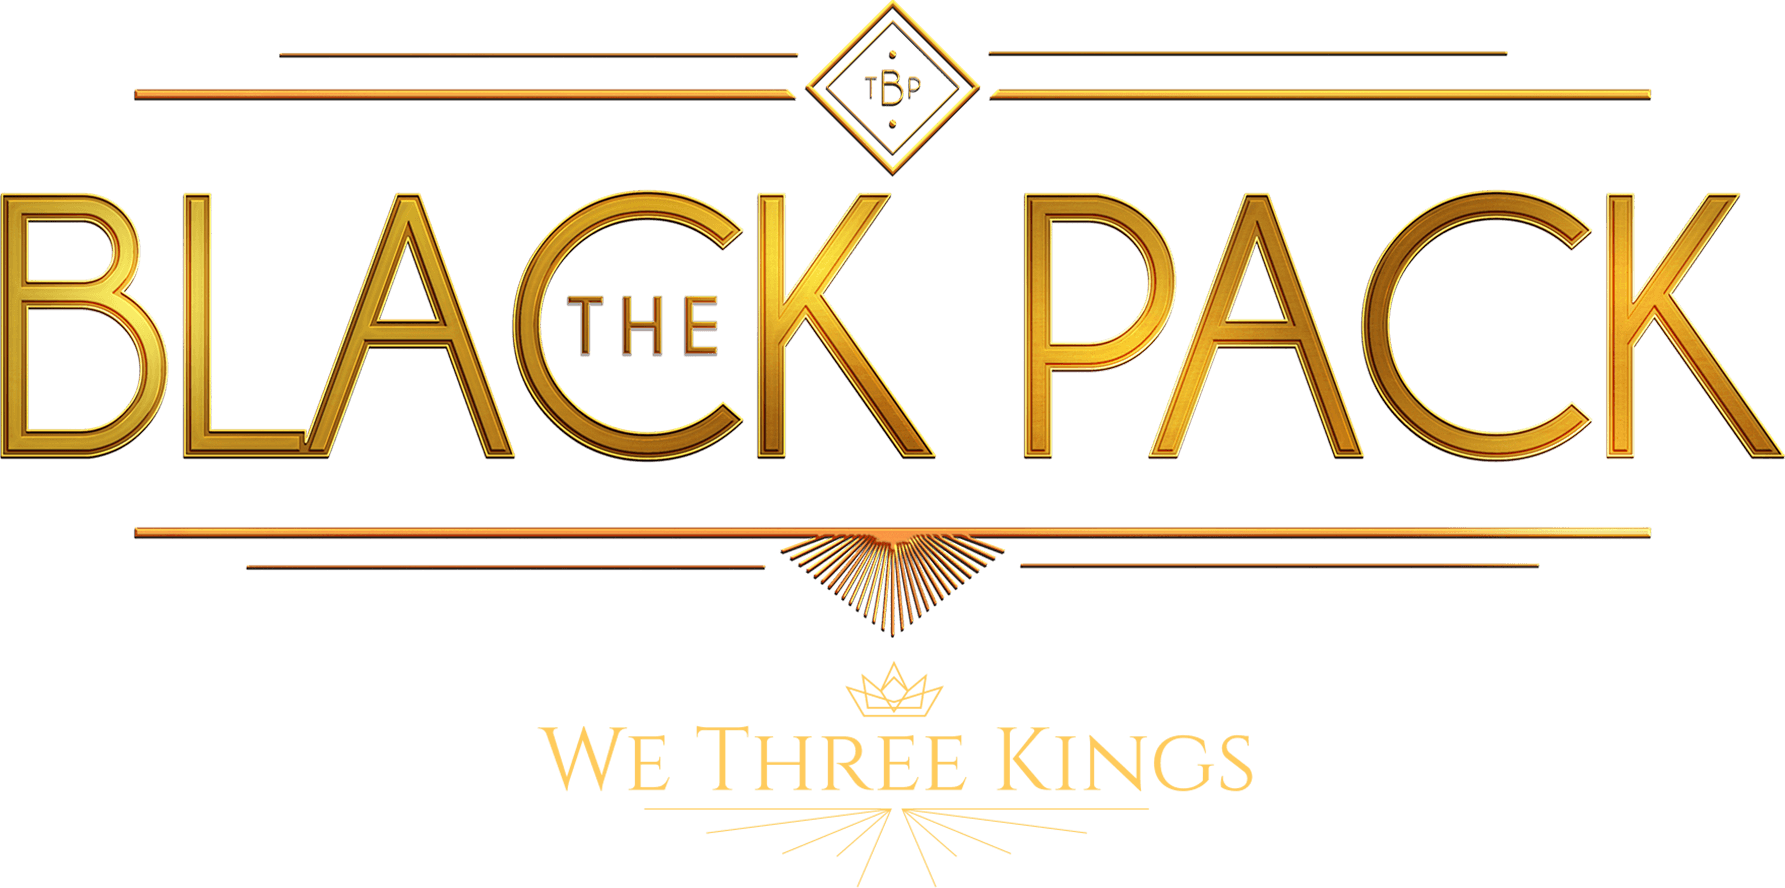 The Black Pack: We Three Kings logo